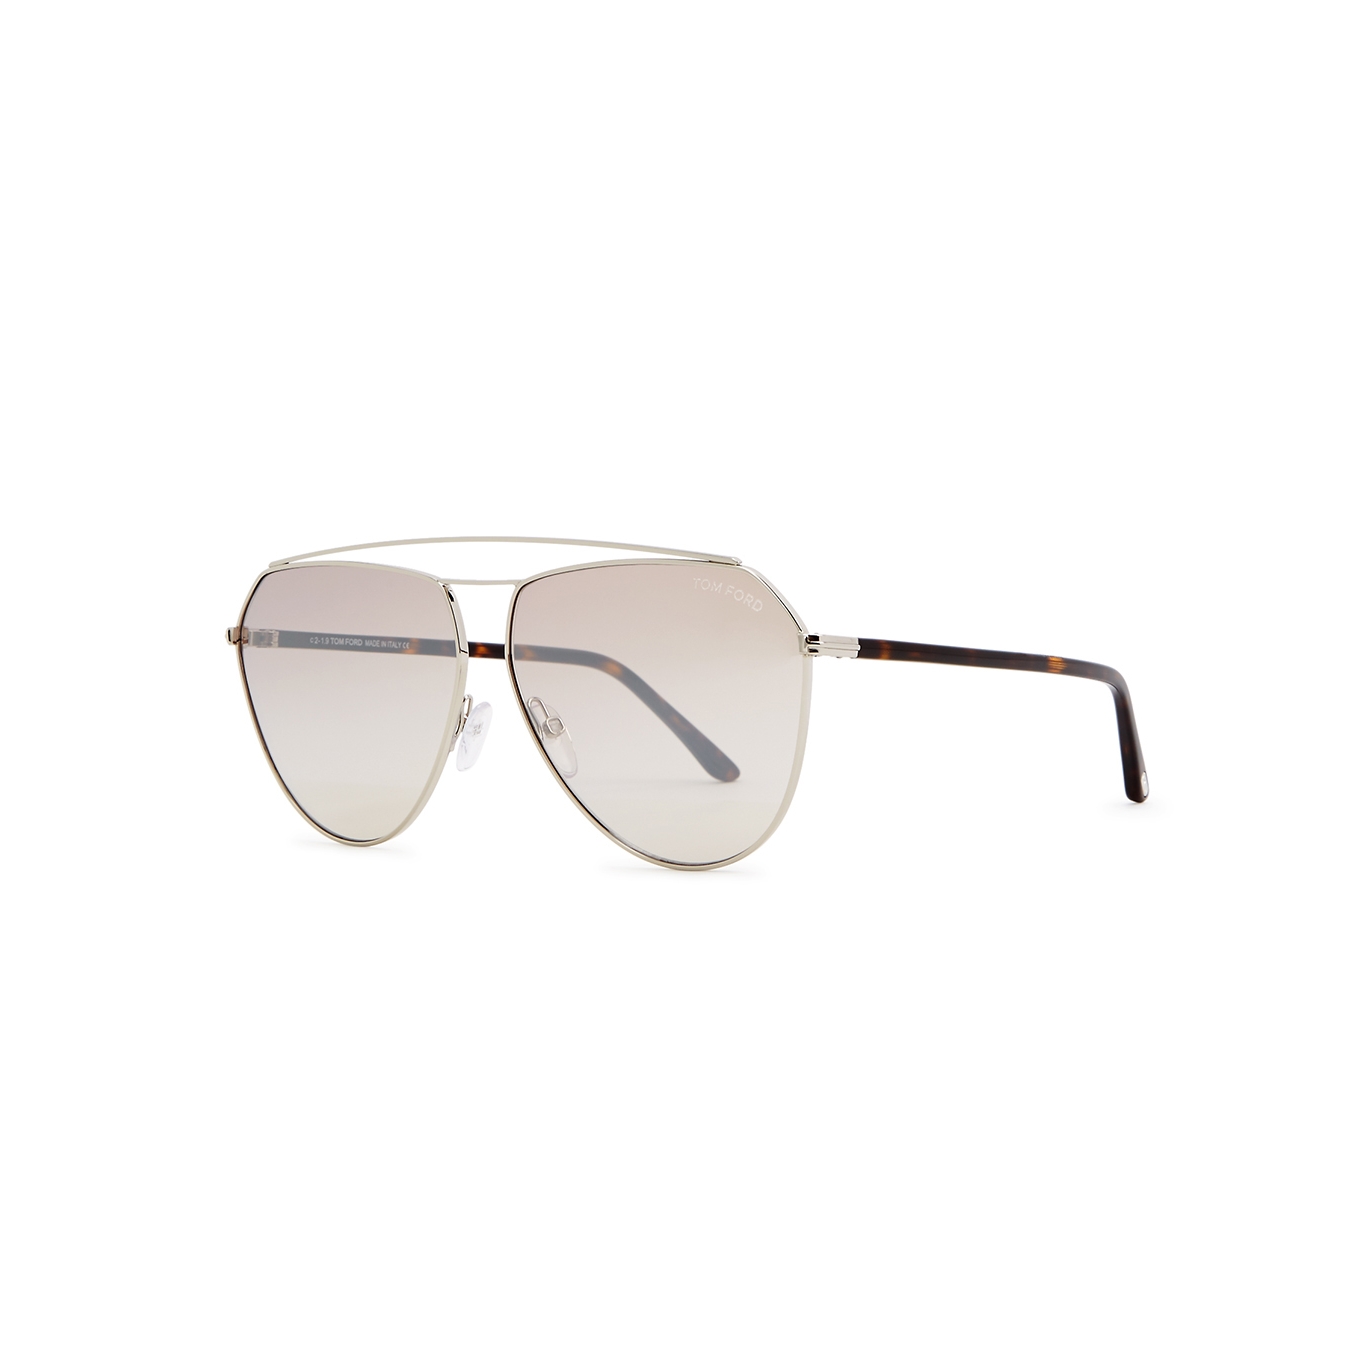 Tom Ford Binx silver-tone aviator-style sunglasses - Harvey Nichols